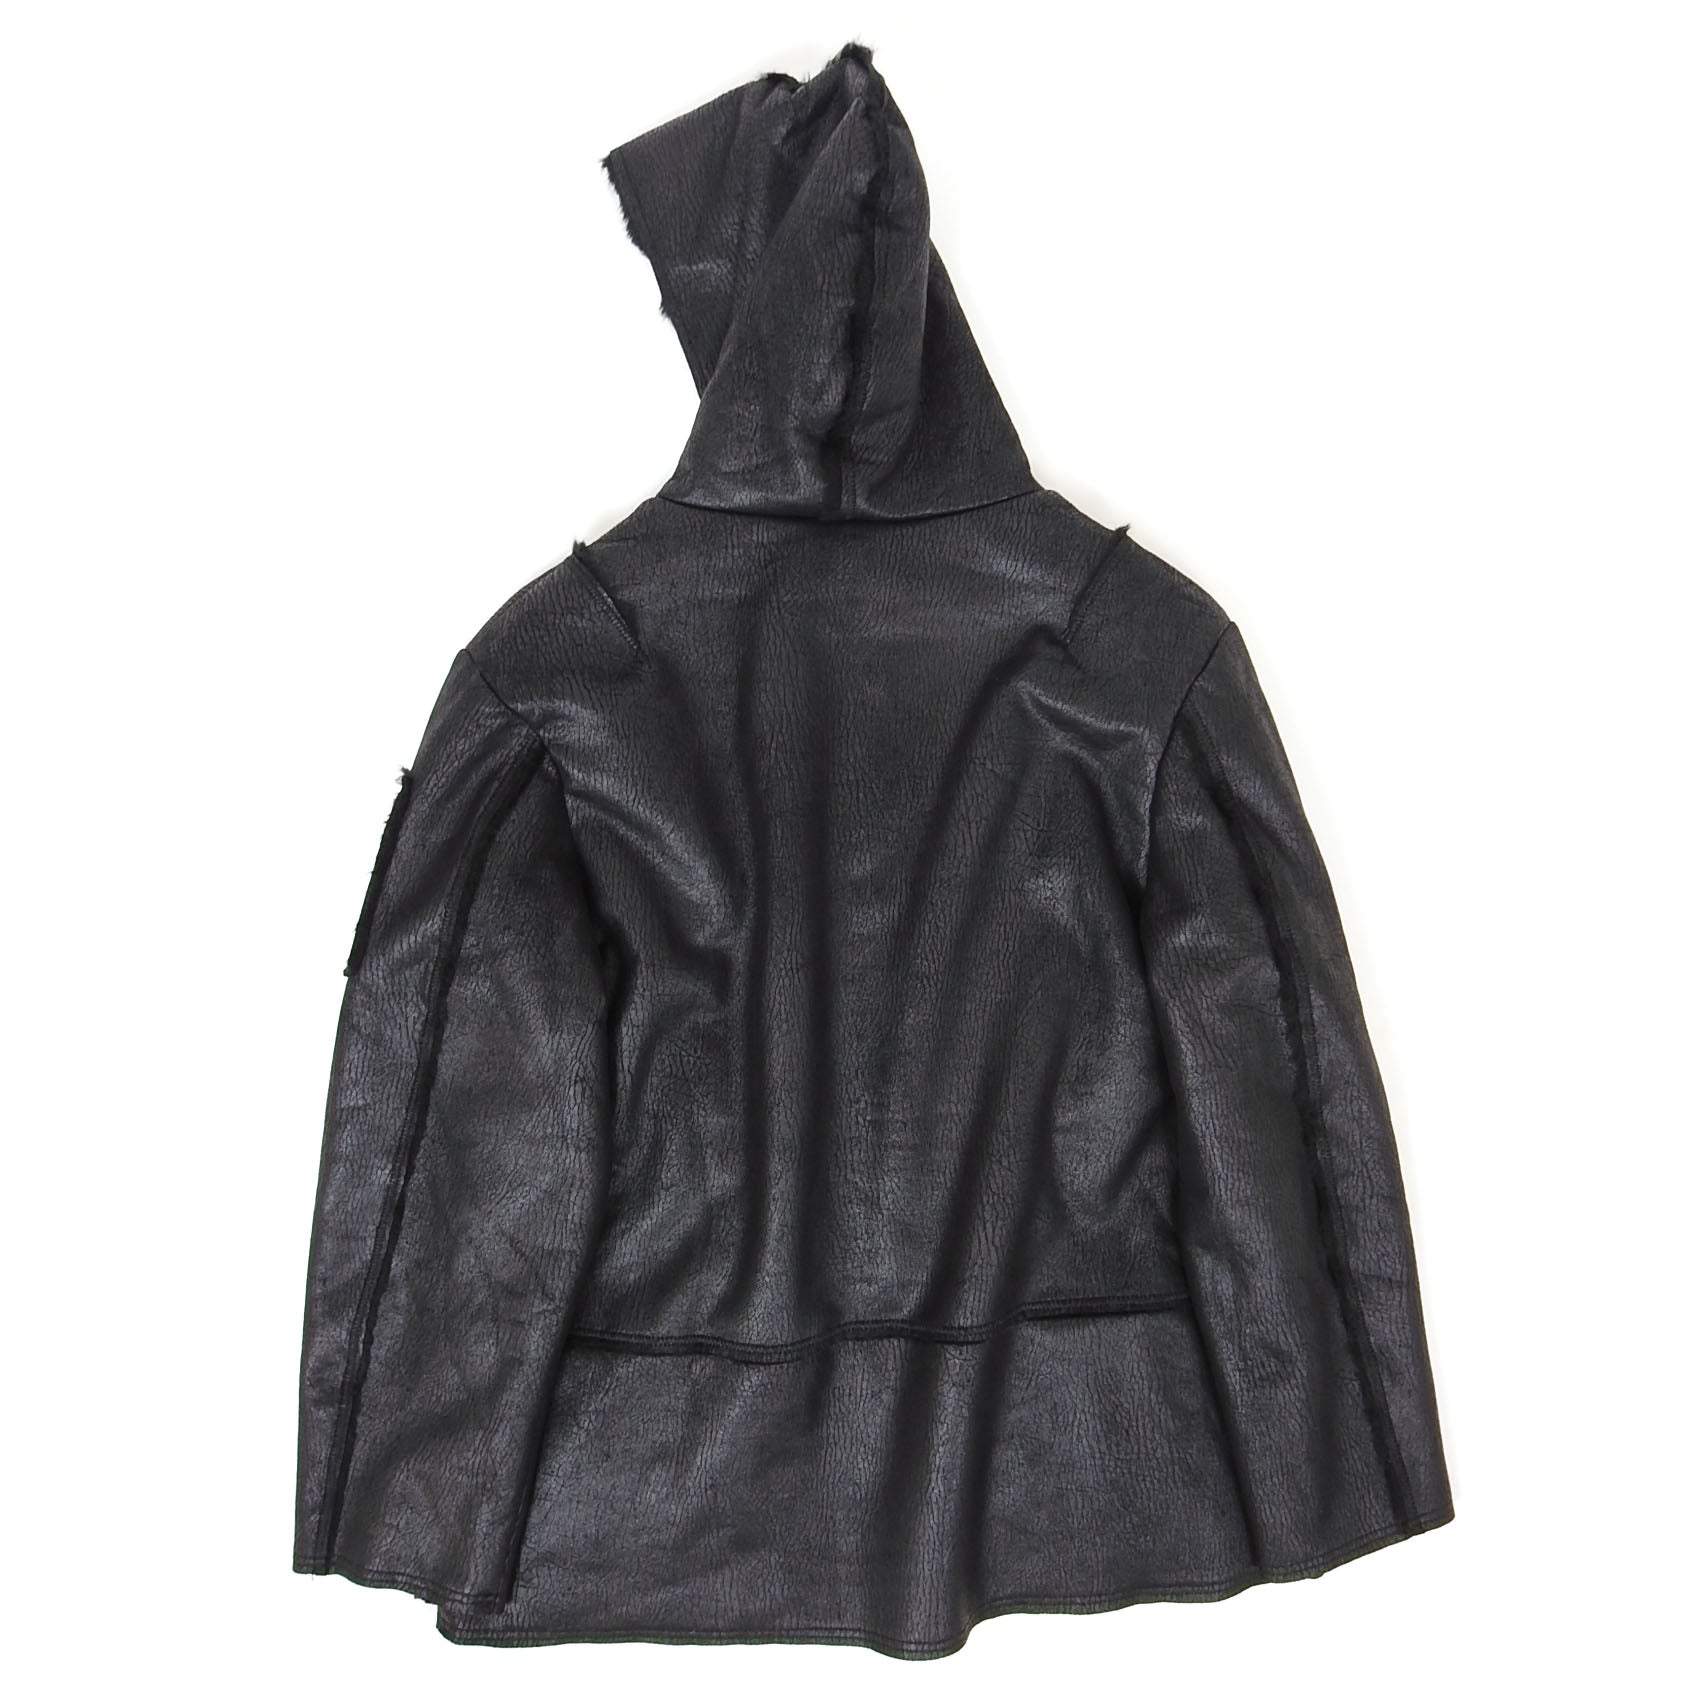 Gosha Rubchinskiy Faux Fur Lined Denim Jacket, $1,264